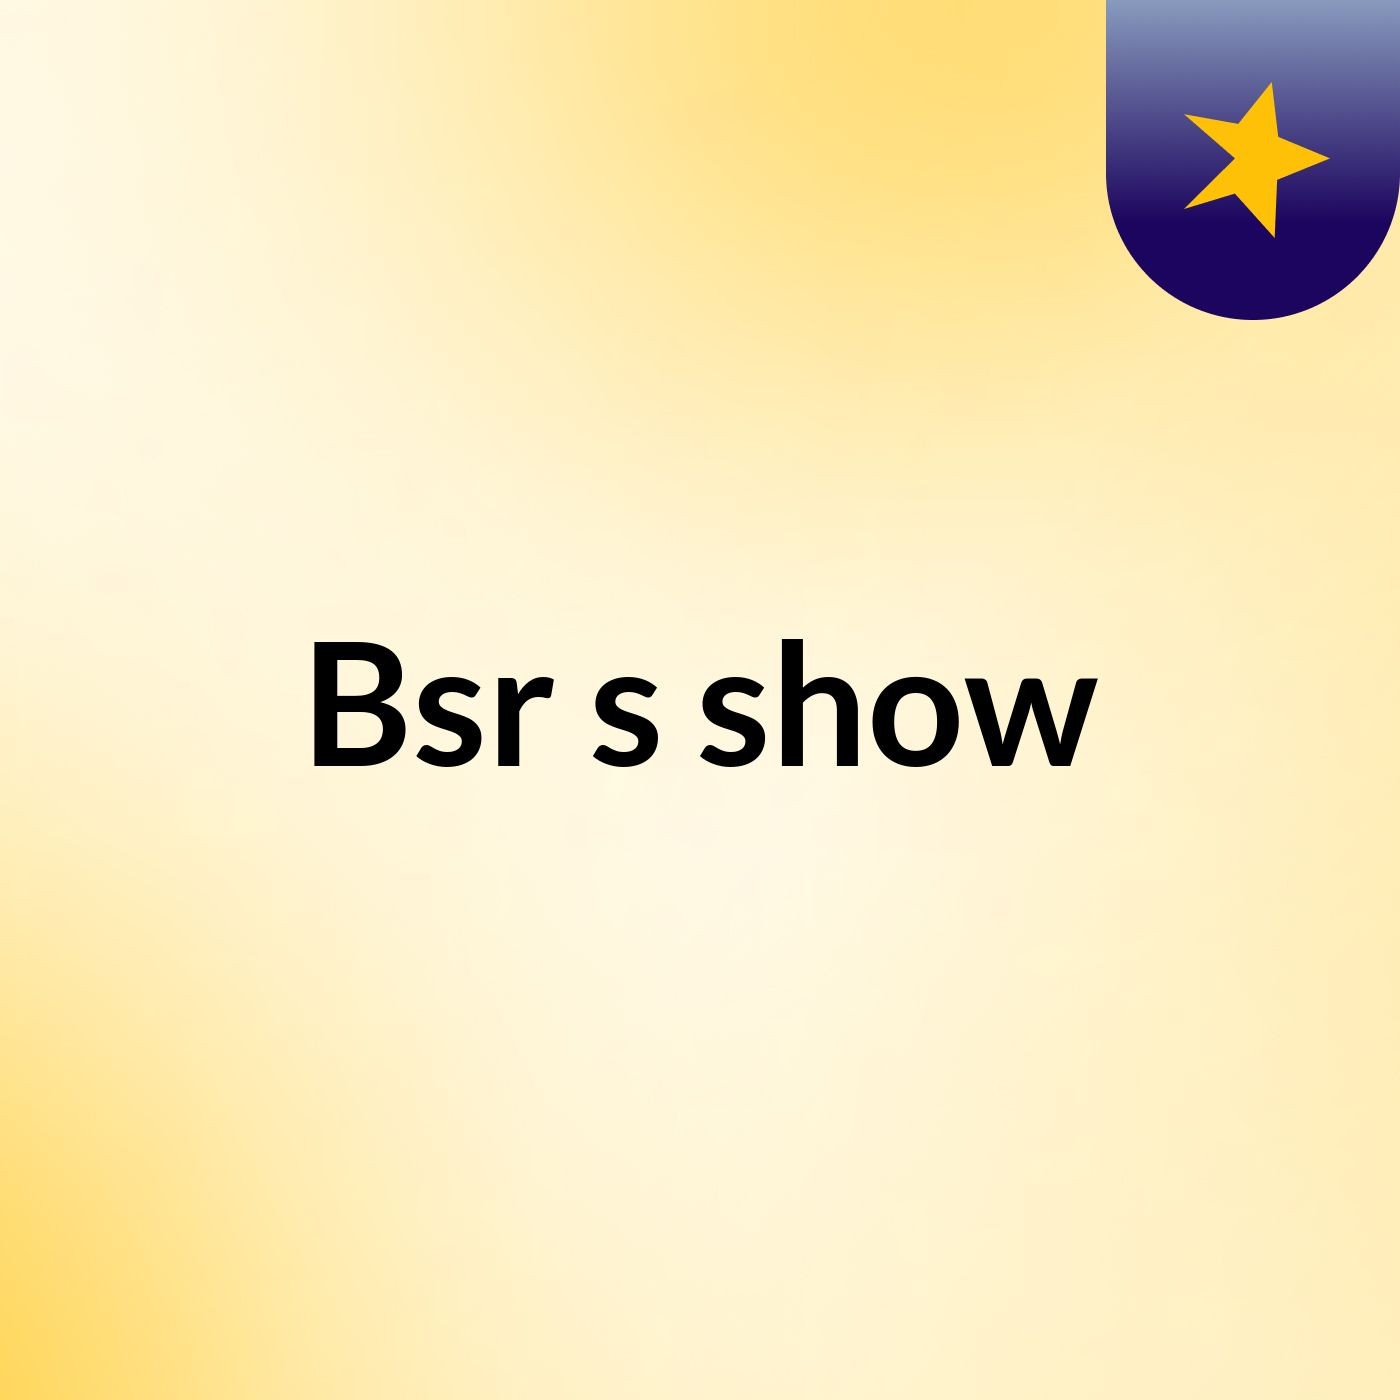 Bsr's show